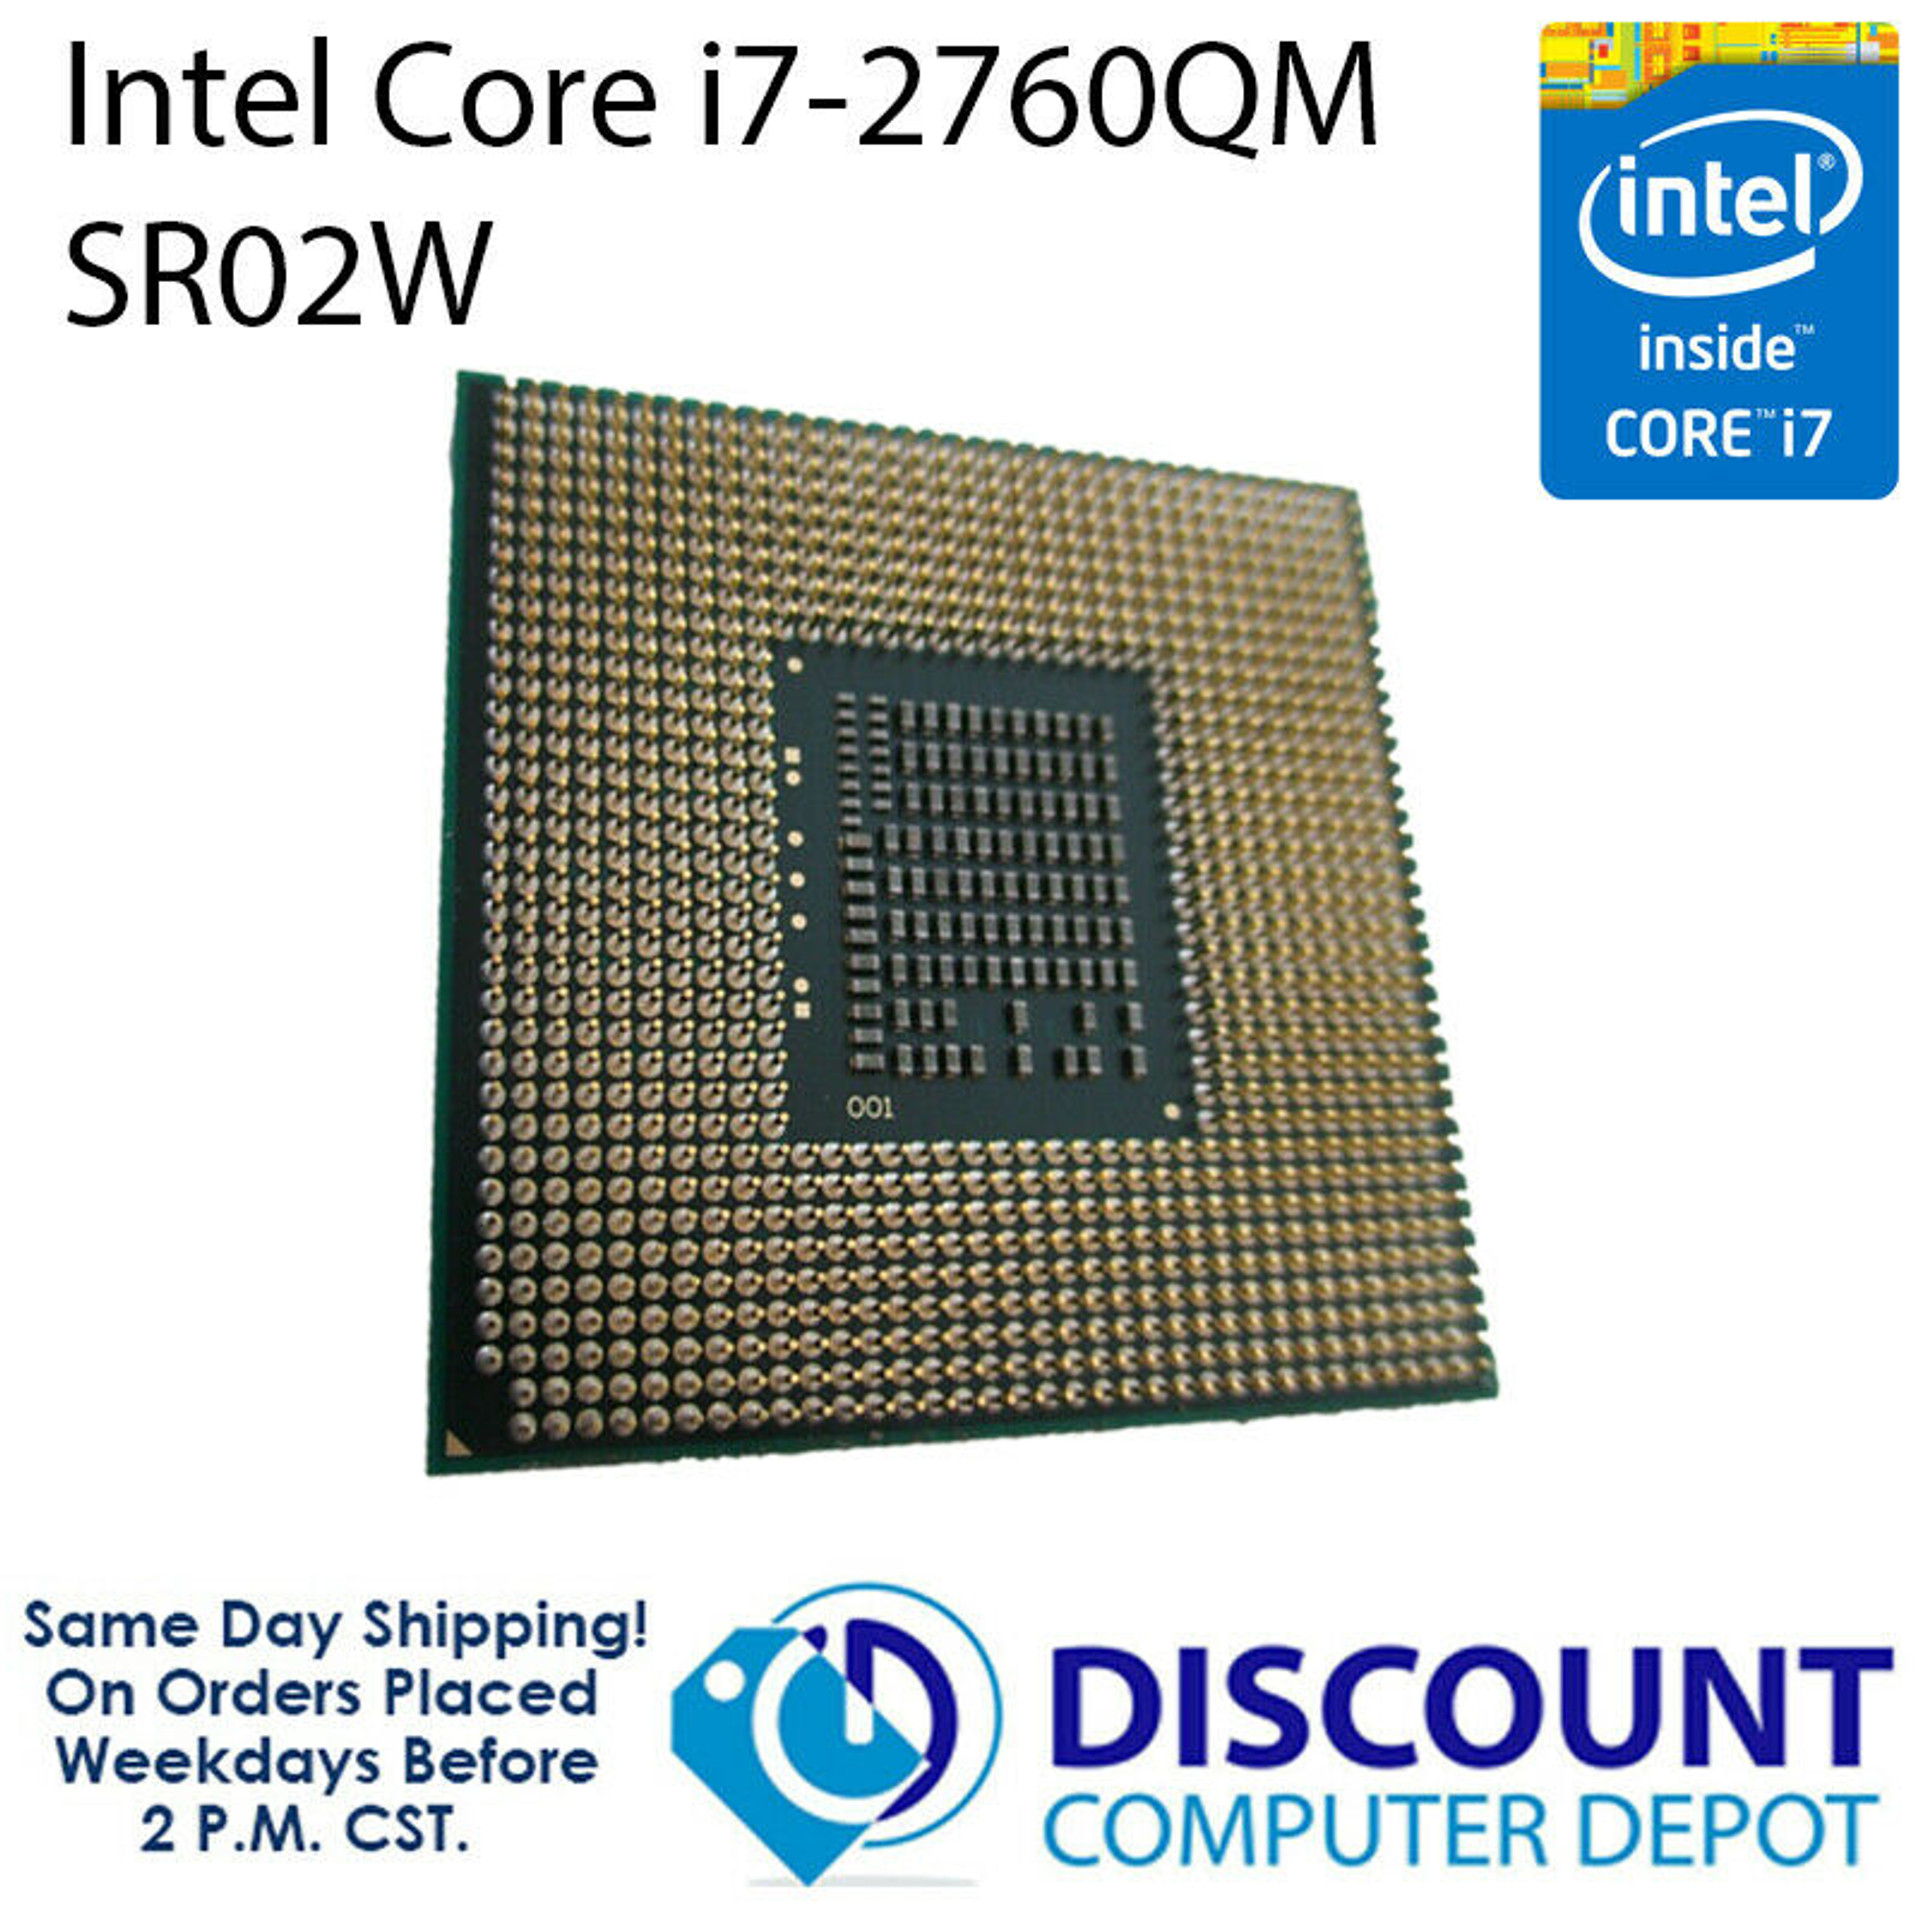 Intel Core i7-2760QM 2.4 GHz Quad-Core Laptop CPU Processor SR02W